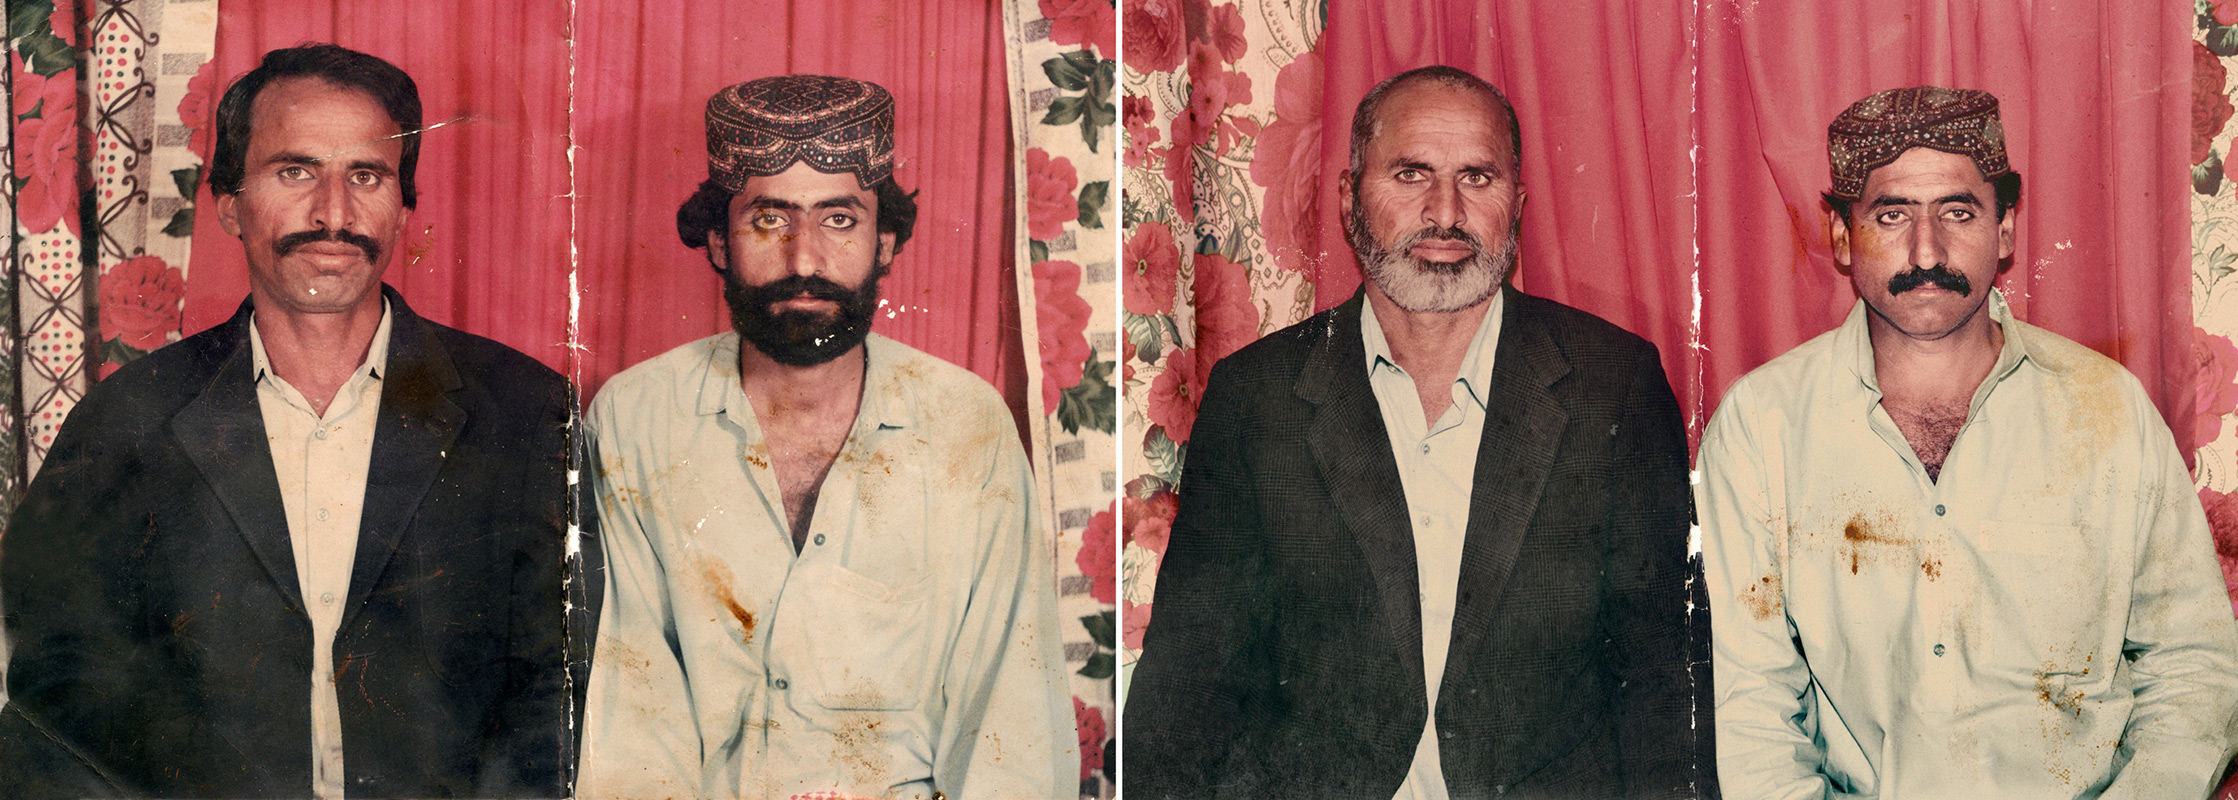 Мохаммед и Хаджи 1988-2013 деревня Гелпур, Пакистан